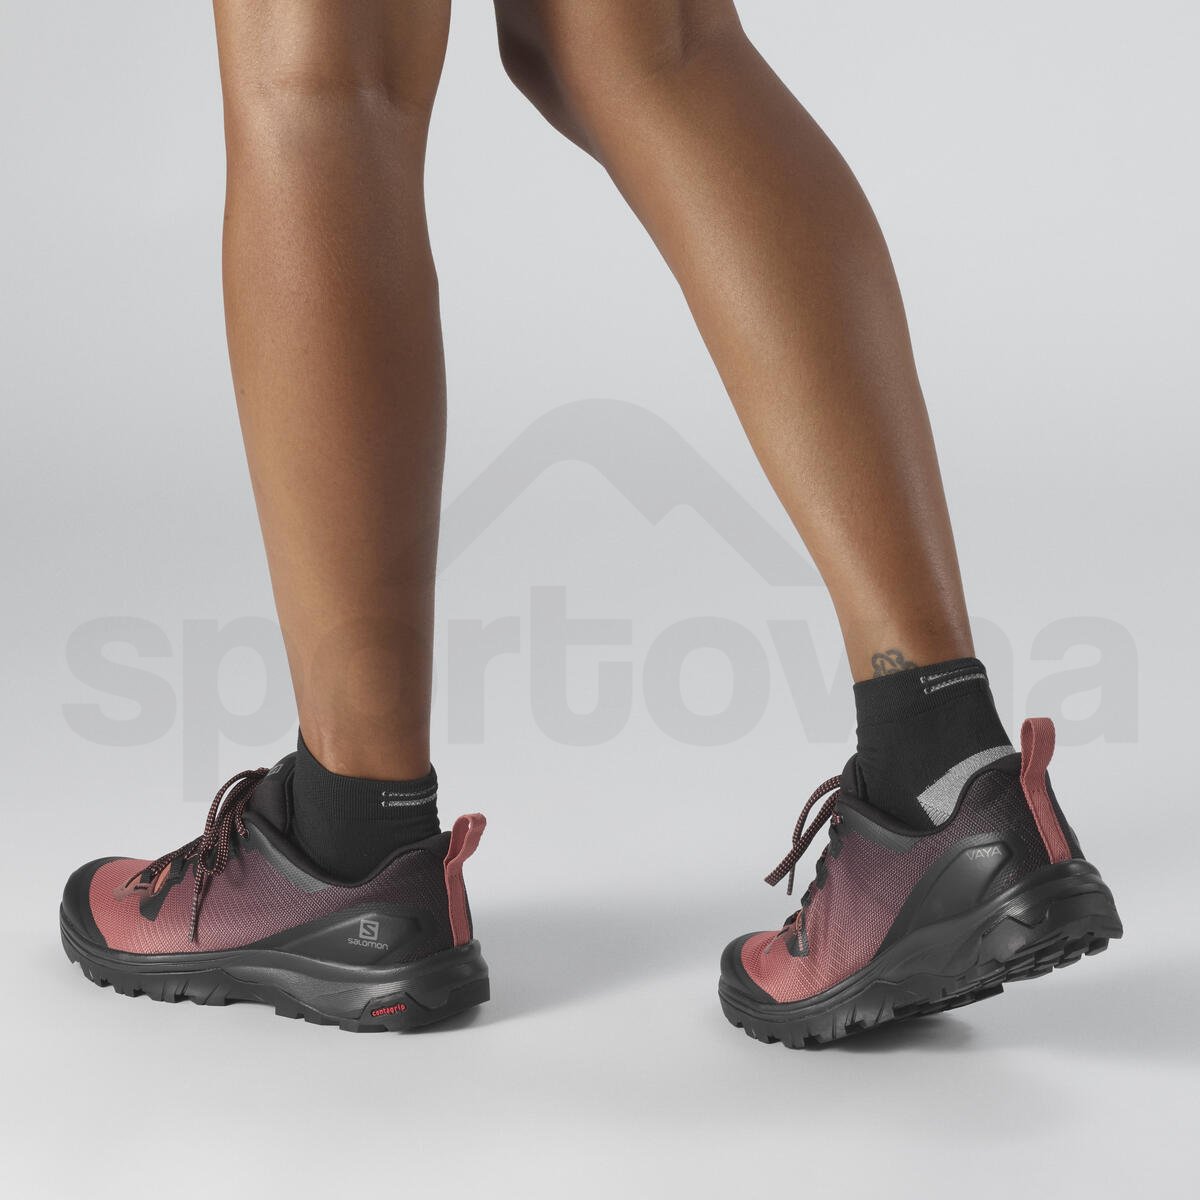 Treková obuv Salomon Vaya W - černá/růžová